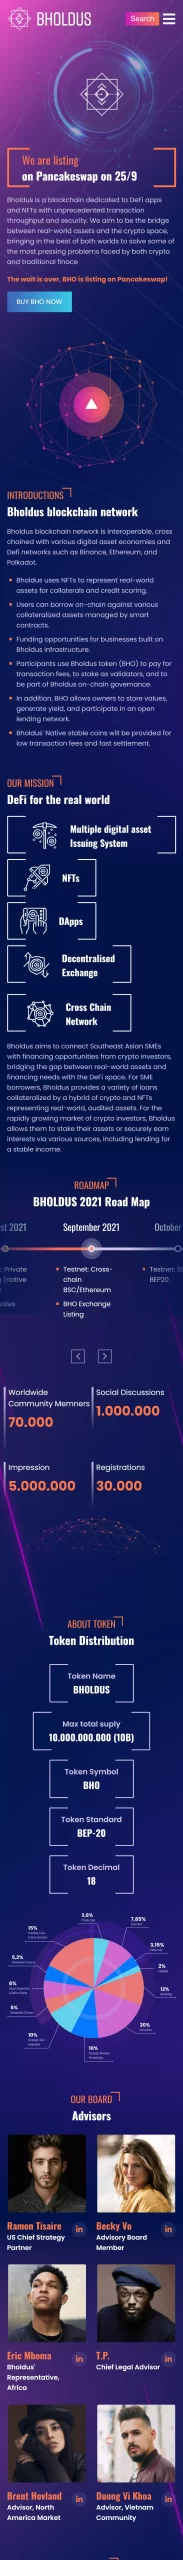 bholdus.epalsoft.com (iphone 12 pro)